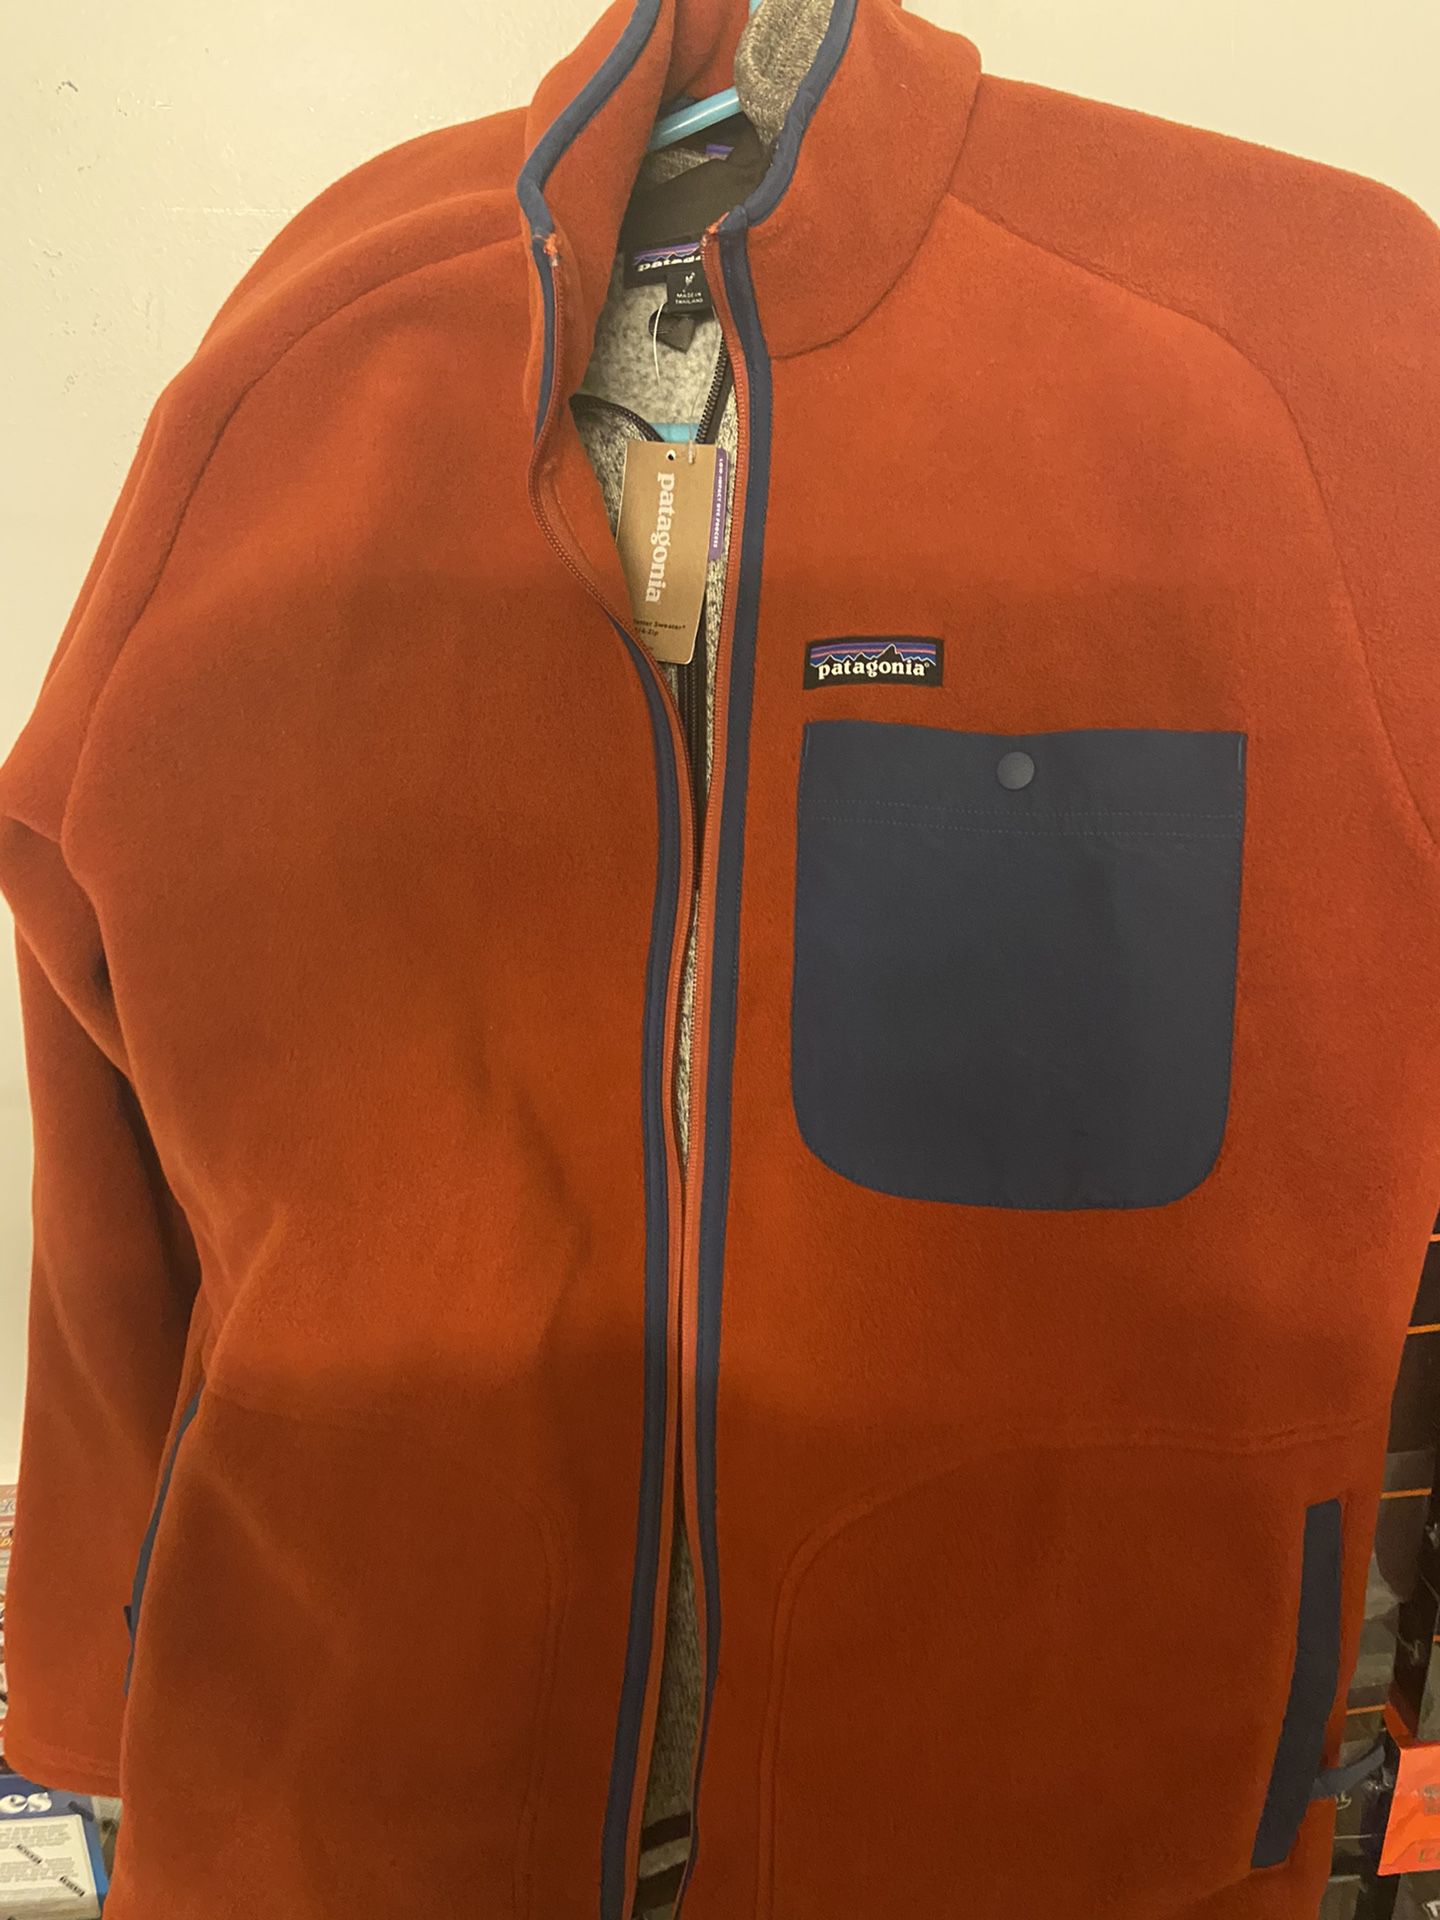 Patagonia Orange Fleece Sz L Brand New With Tags